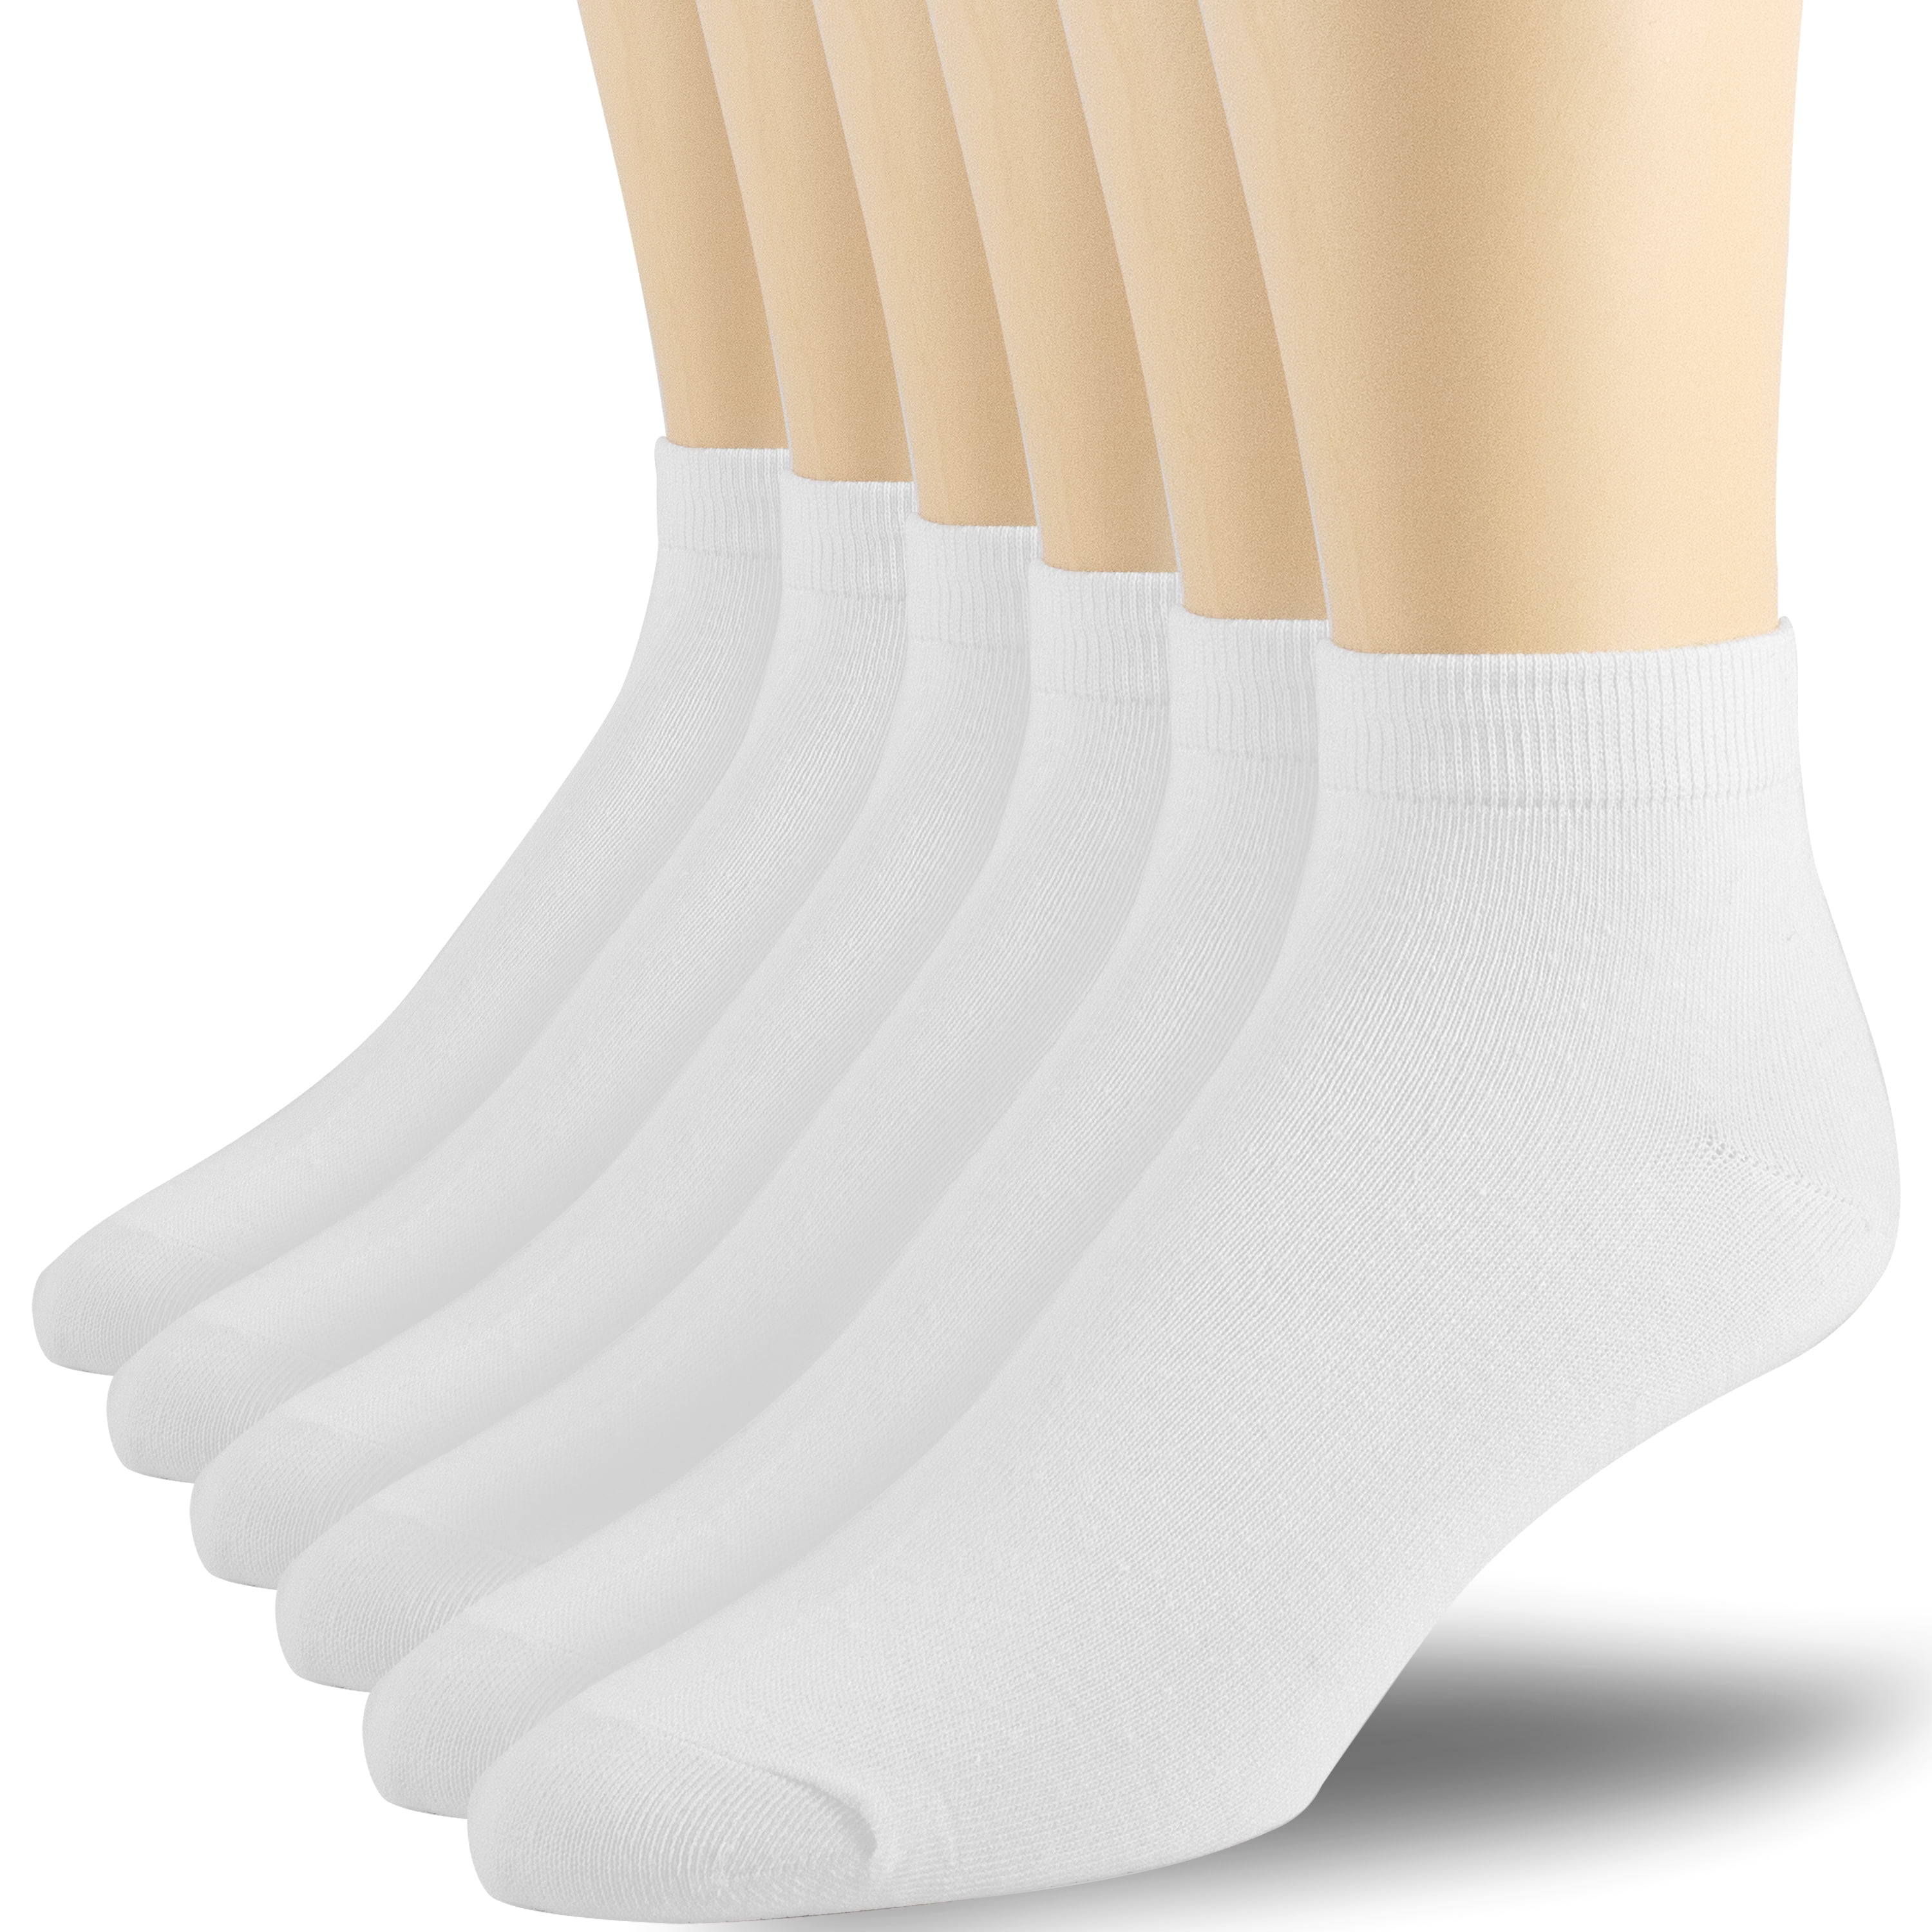 12 Pairs WHITE Ankle Spandex Low Cut Socks Size 10-13 Men Women #70033 WT-A 